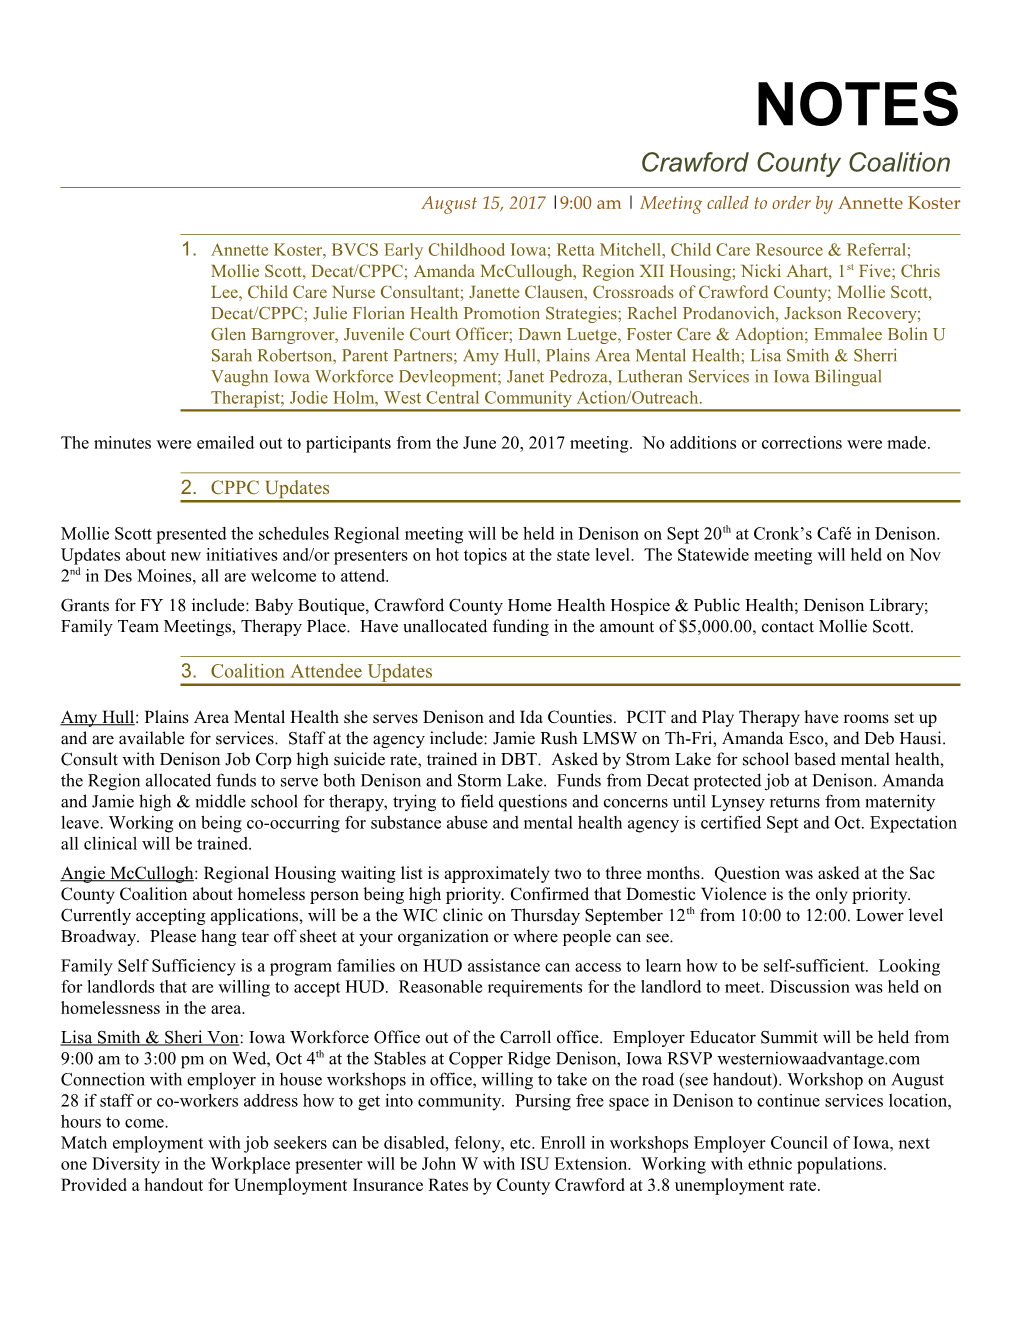 Crawford County Coalition